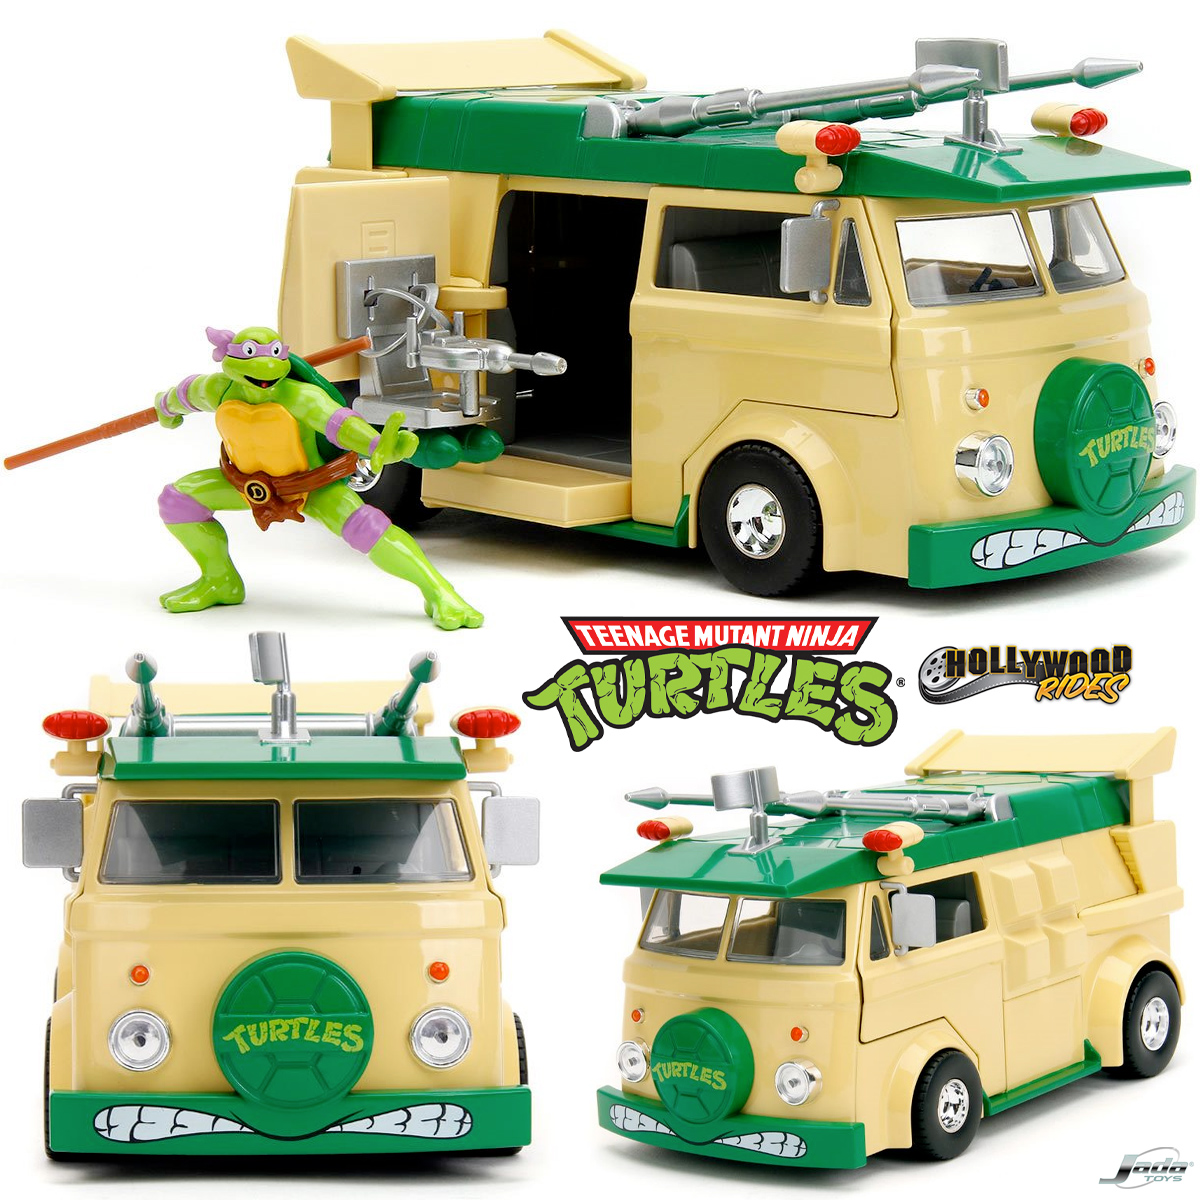 Tartarugas Ninjas Hollywood Rides: Donatello & Furgão Party Wagon